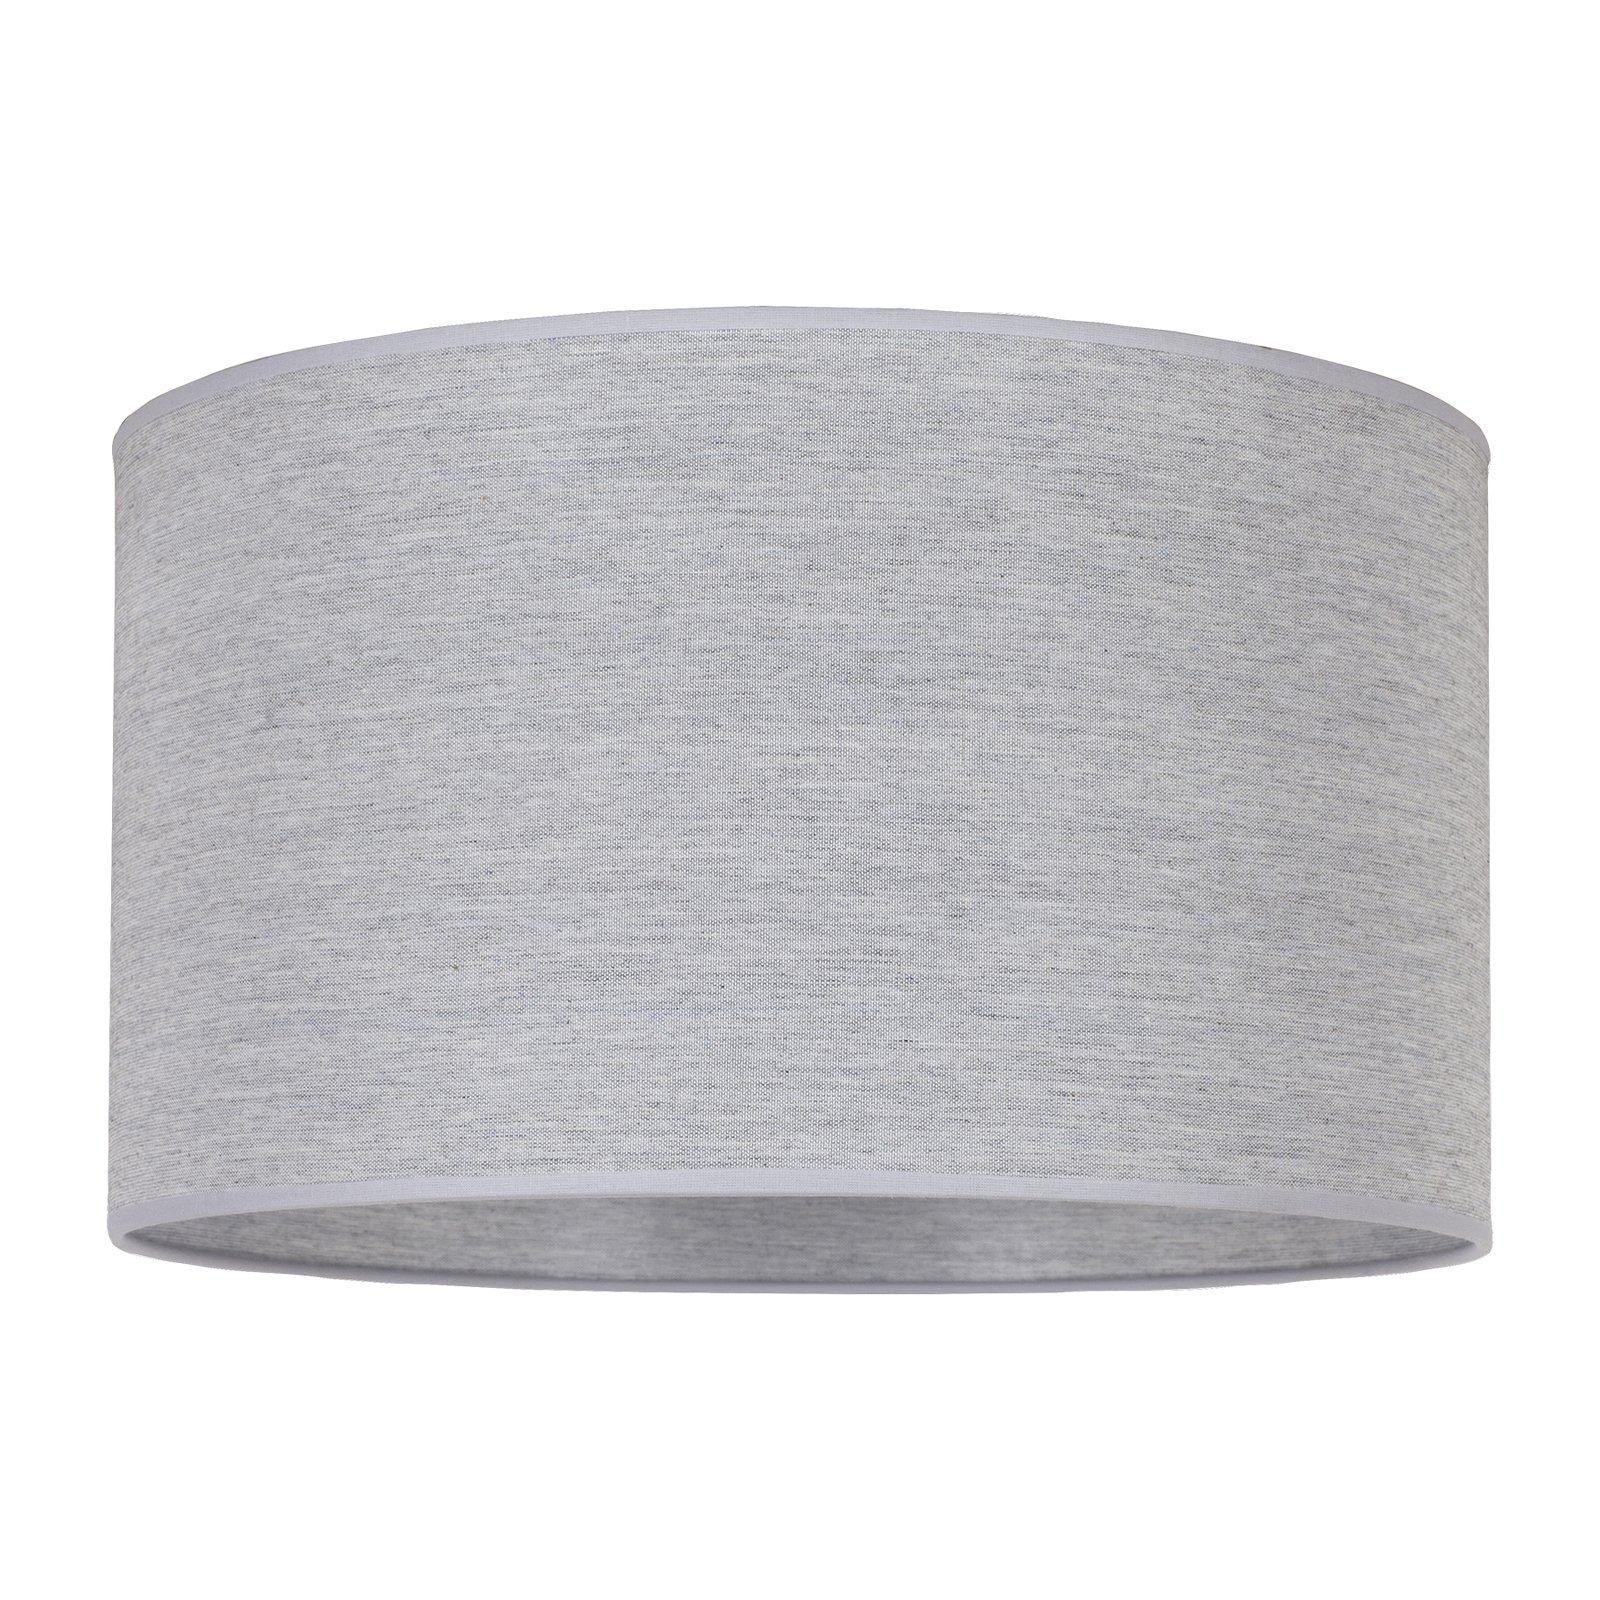 Roller lampshade, grey, Ø 40 cm, height 22 cm